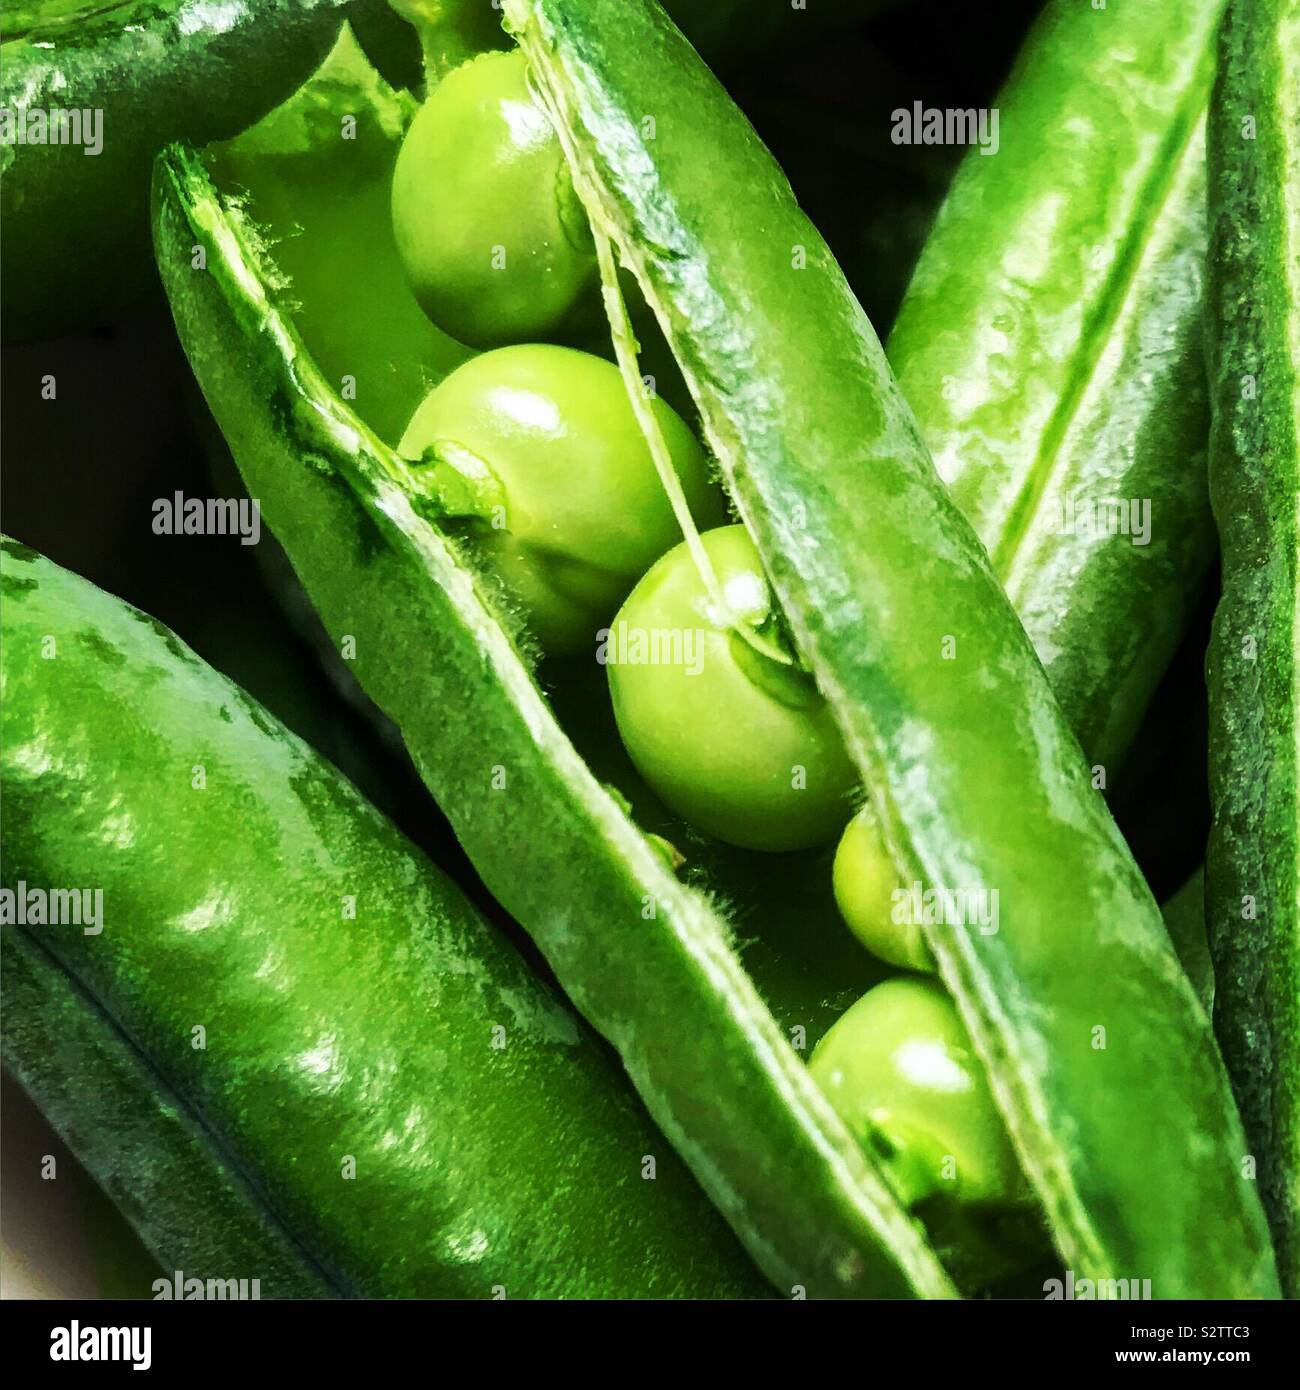 Peas in a Pod Stock Photo